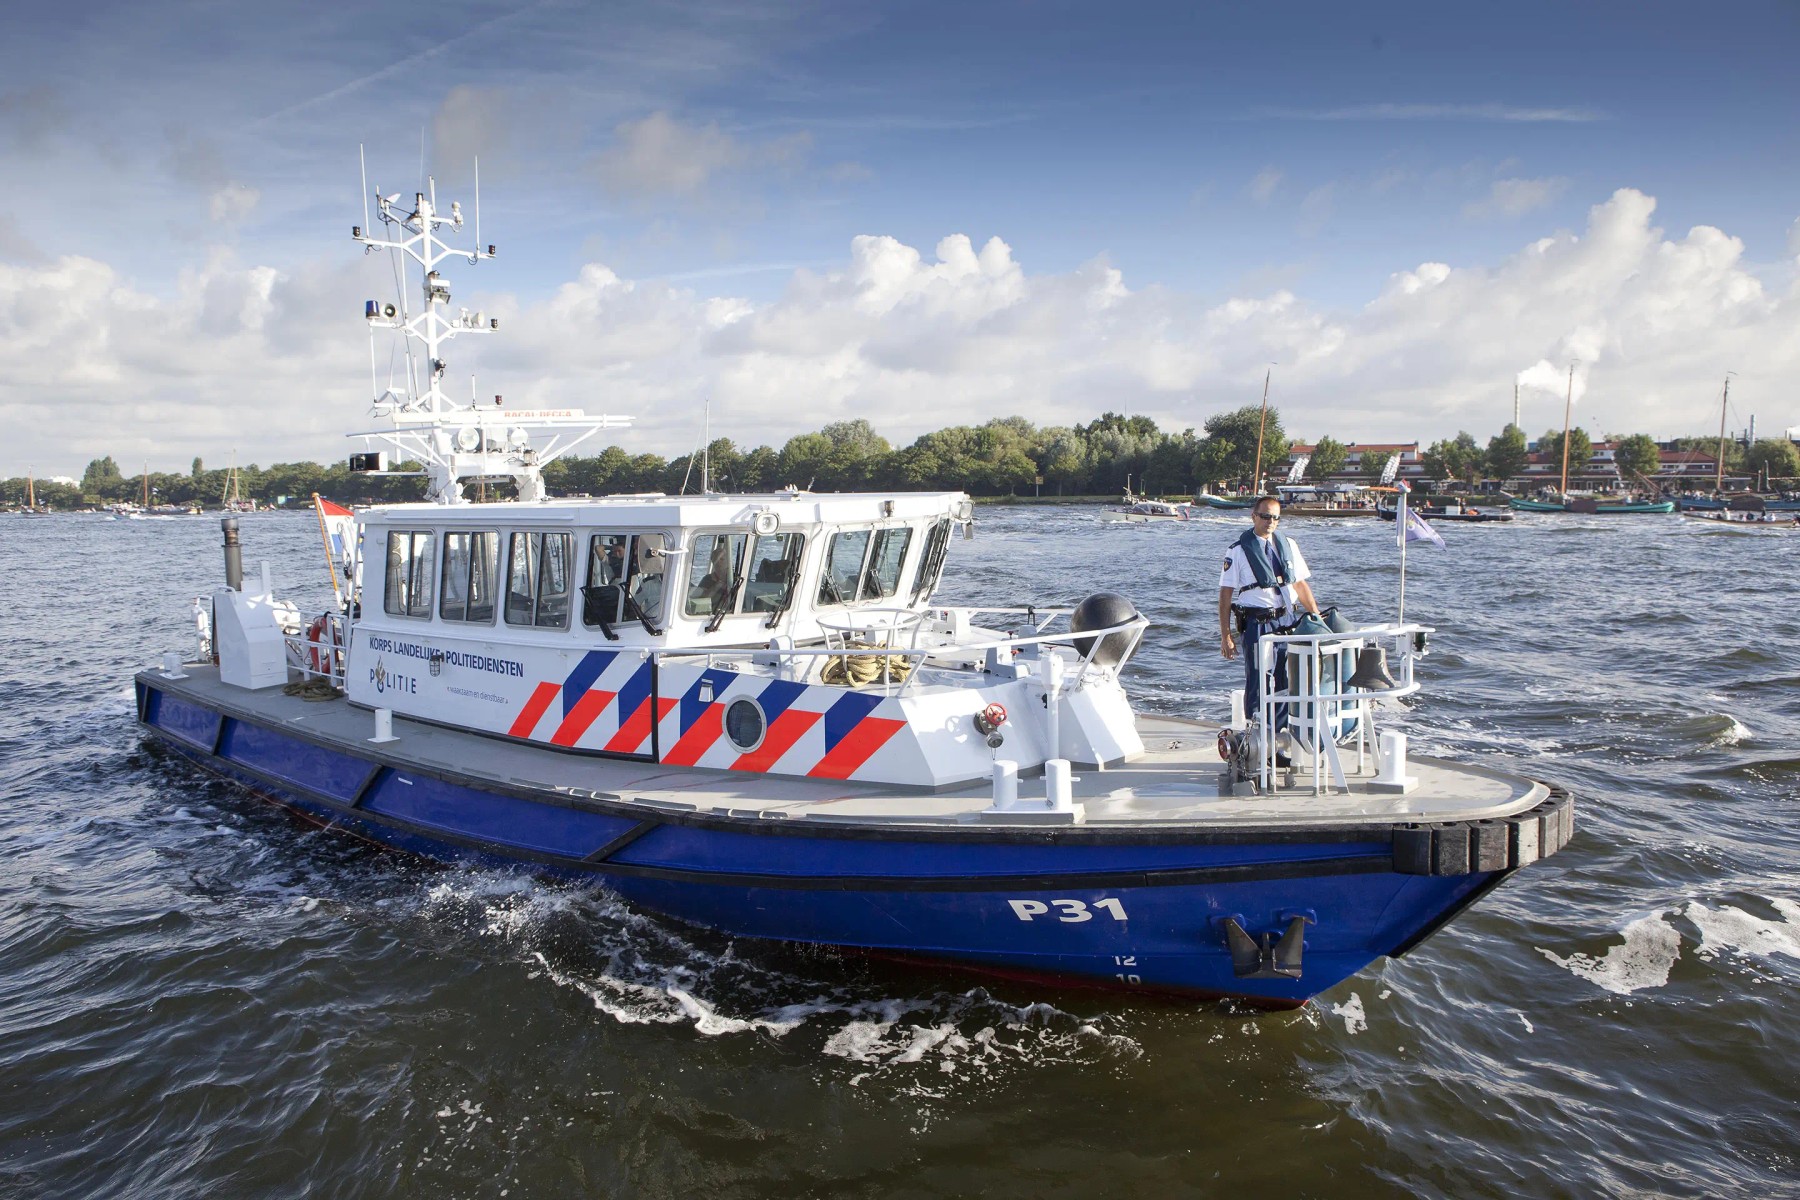 studio-dumbar-police-boat-branding-striping-politie-boot-1600x.webp